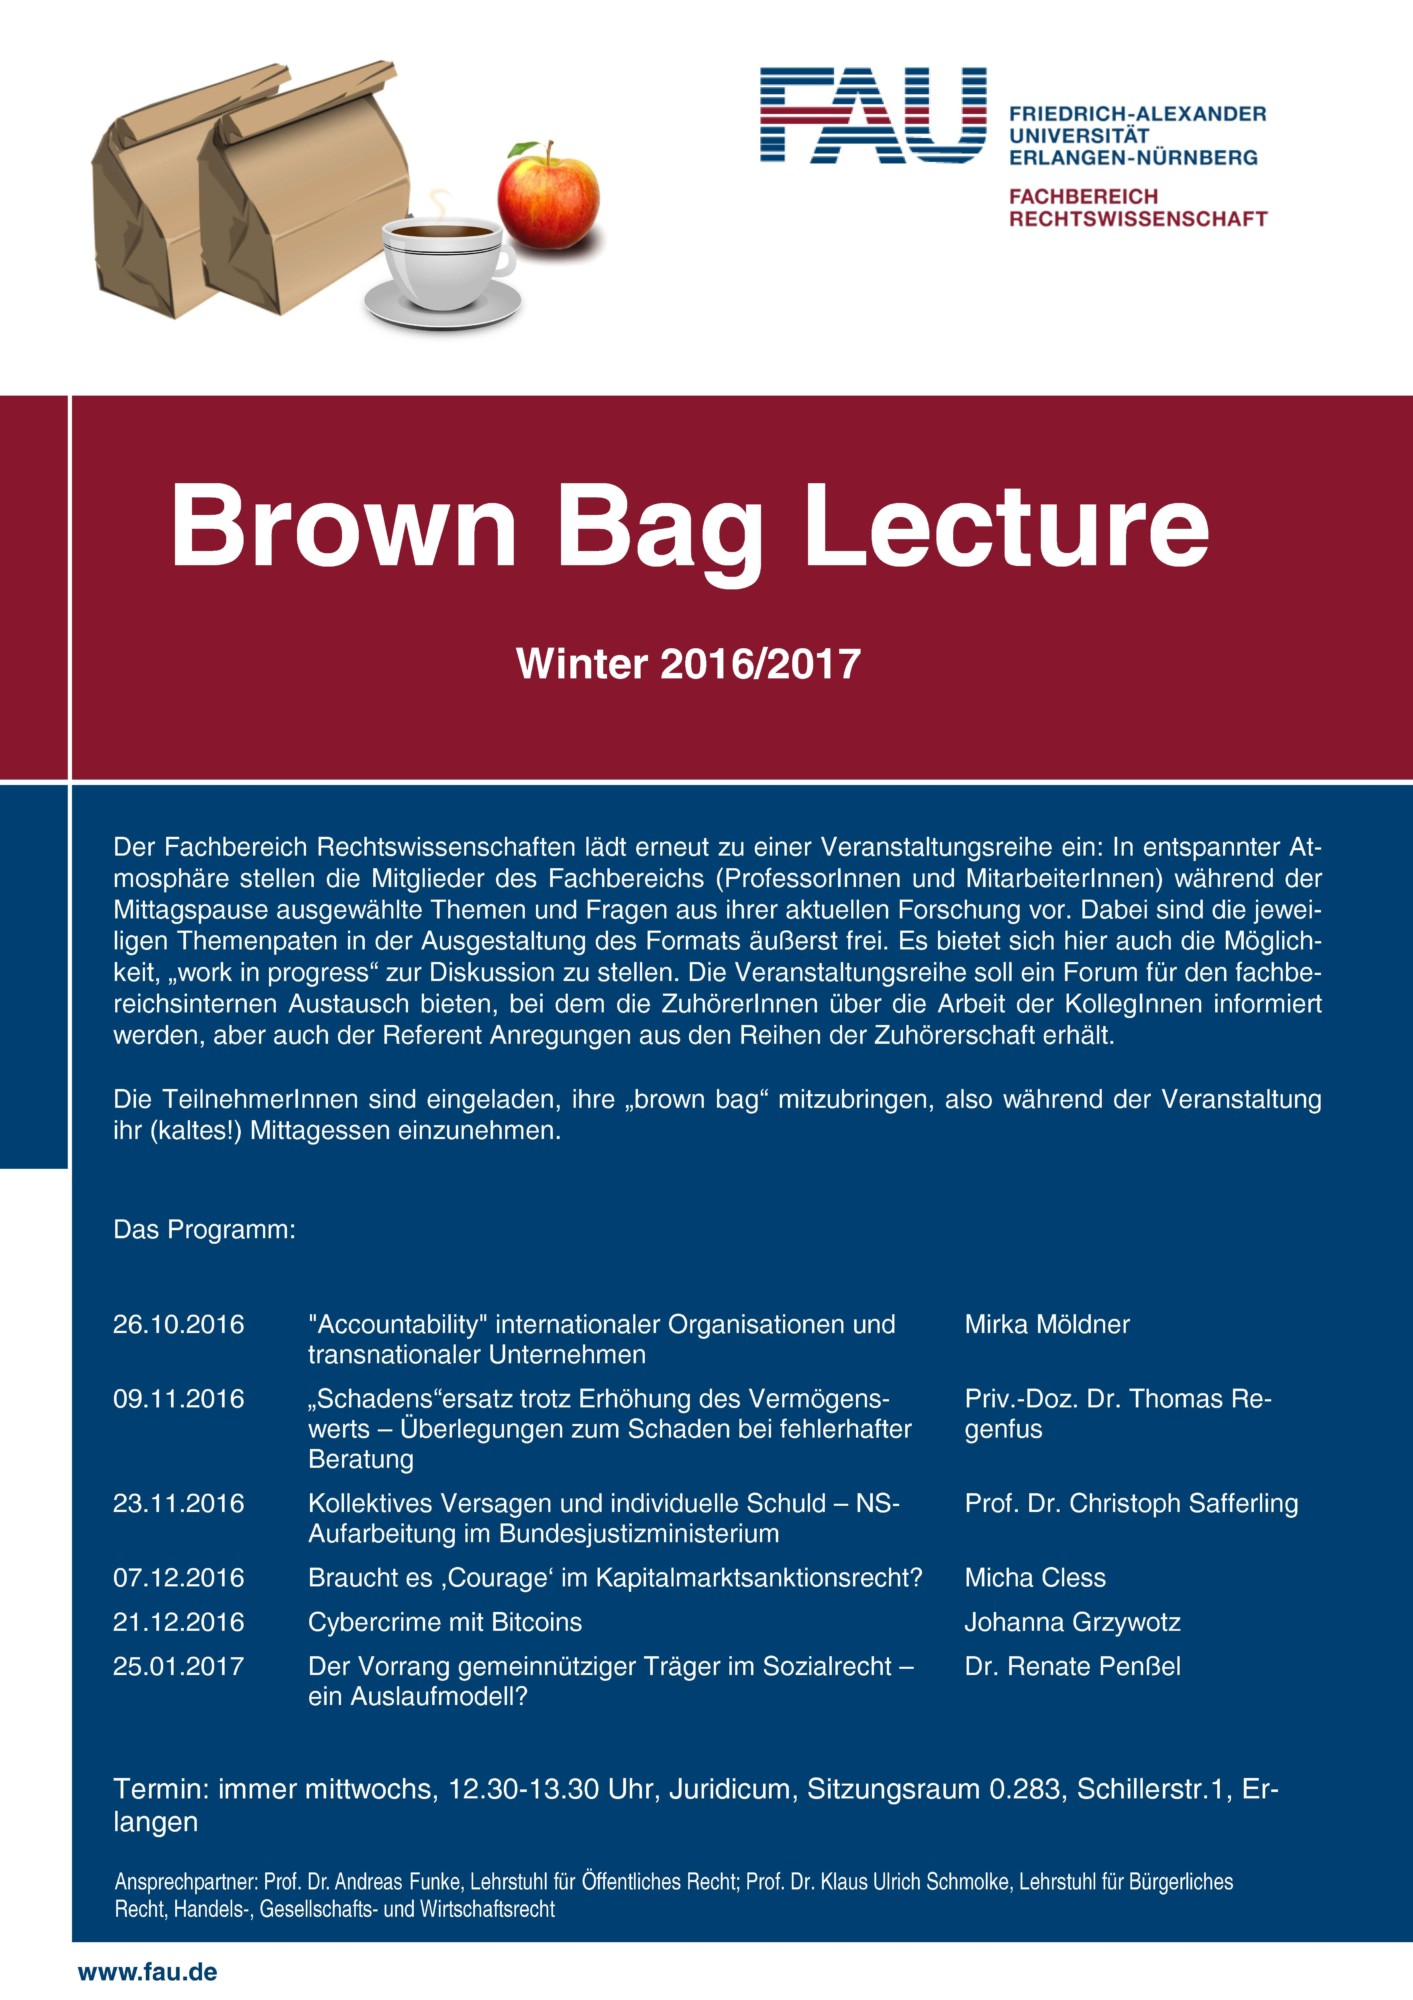 Zum Artikel "Brown Bag Lecture im Wintersemester 2016/17"